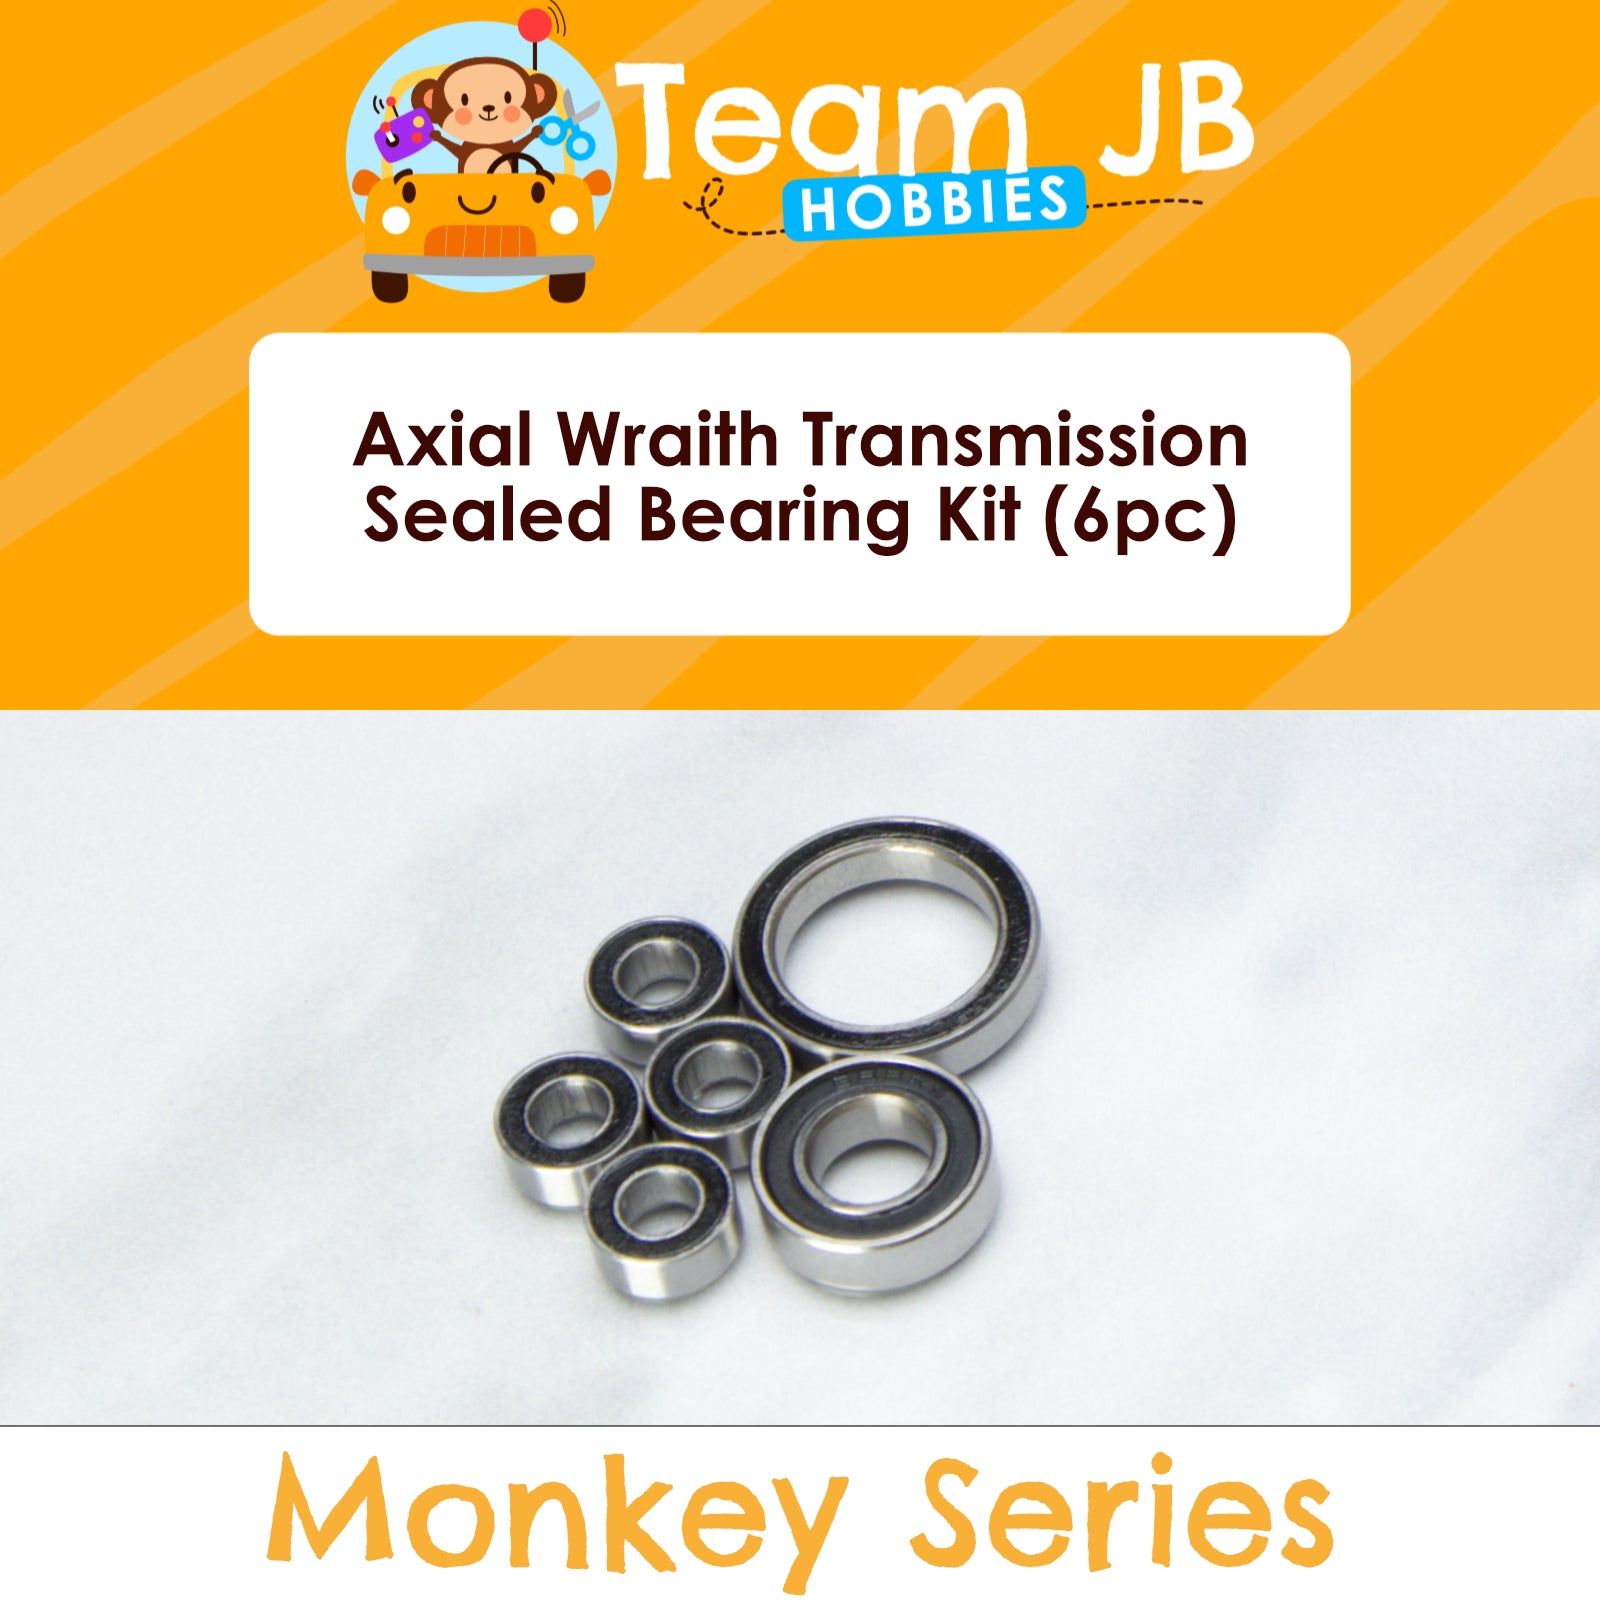 Axial Wraith Transmission - Sealed Bearing Kit